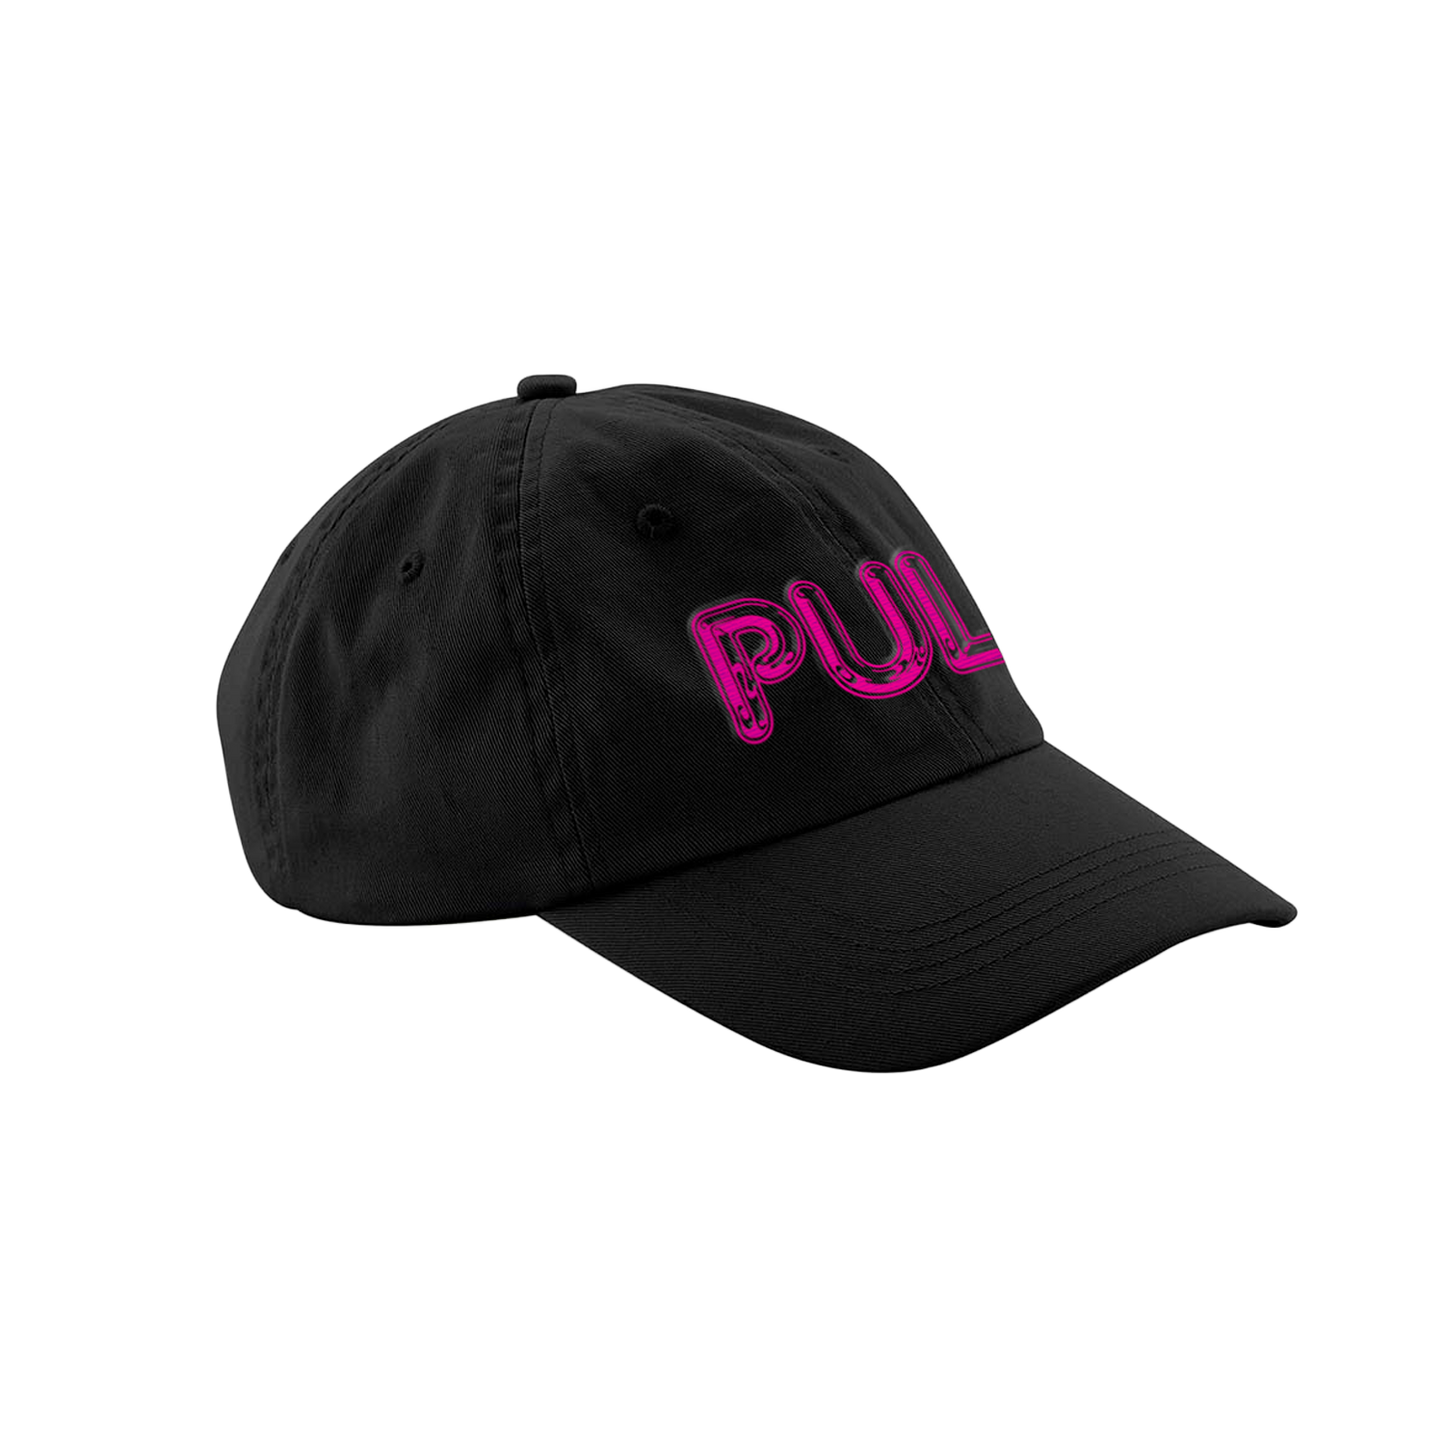 Pulp Pink Logo Black Cap